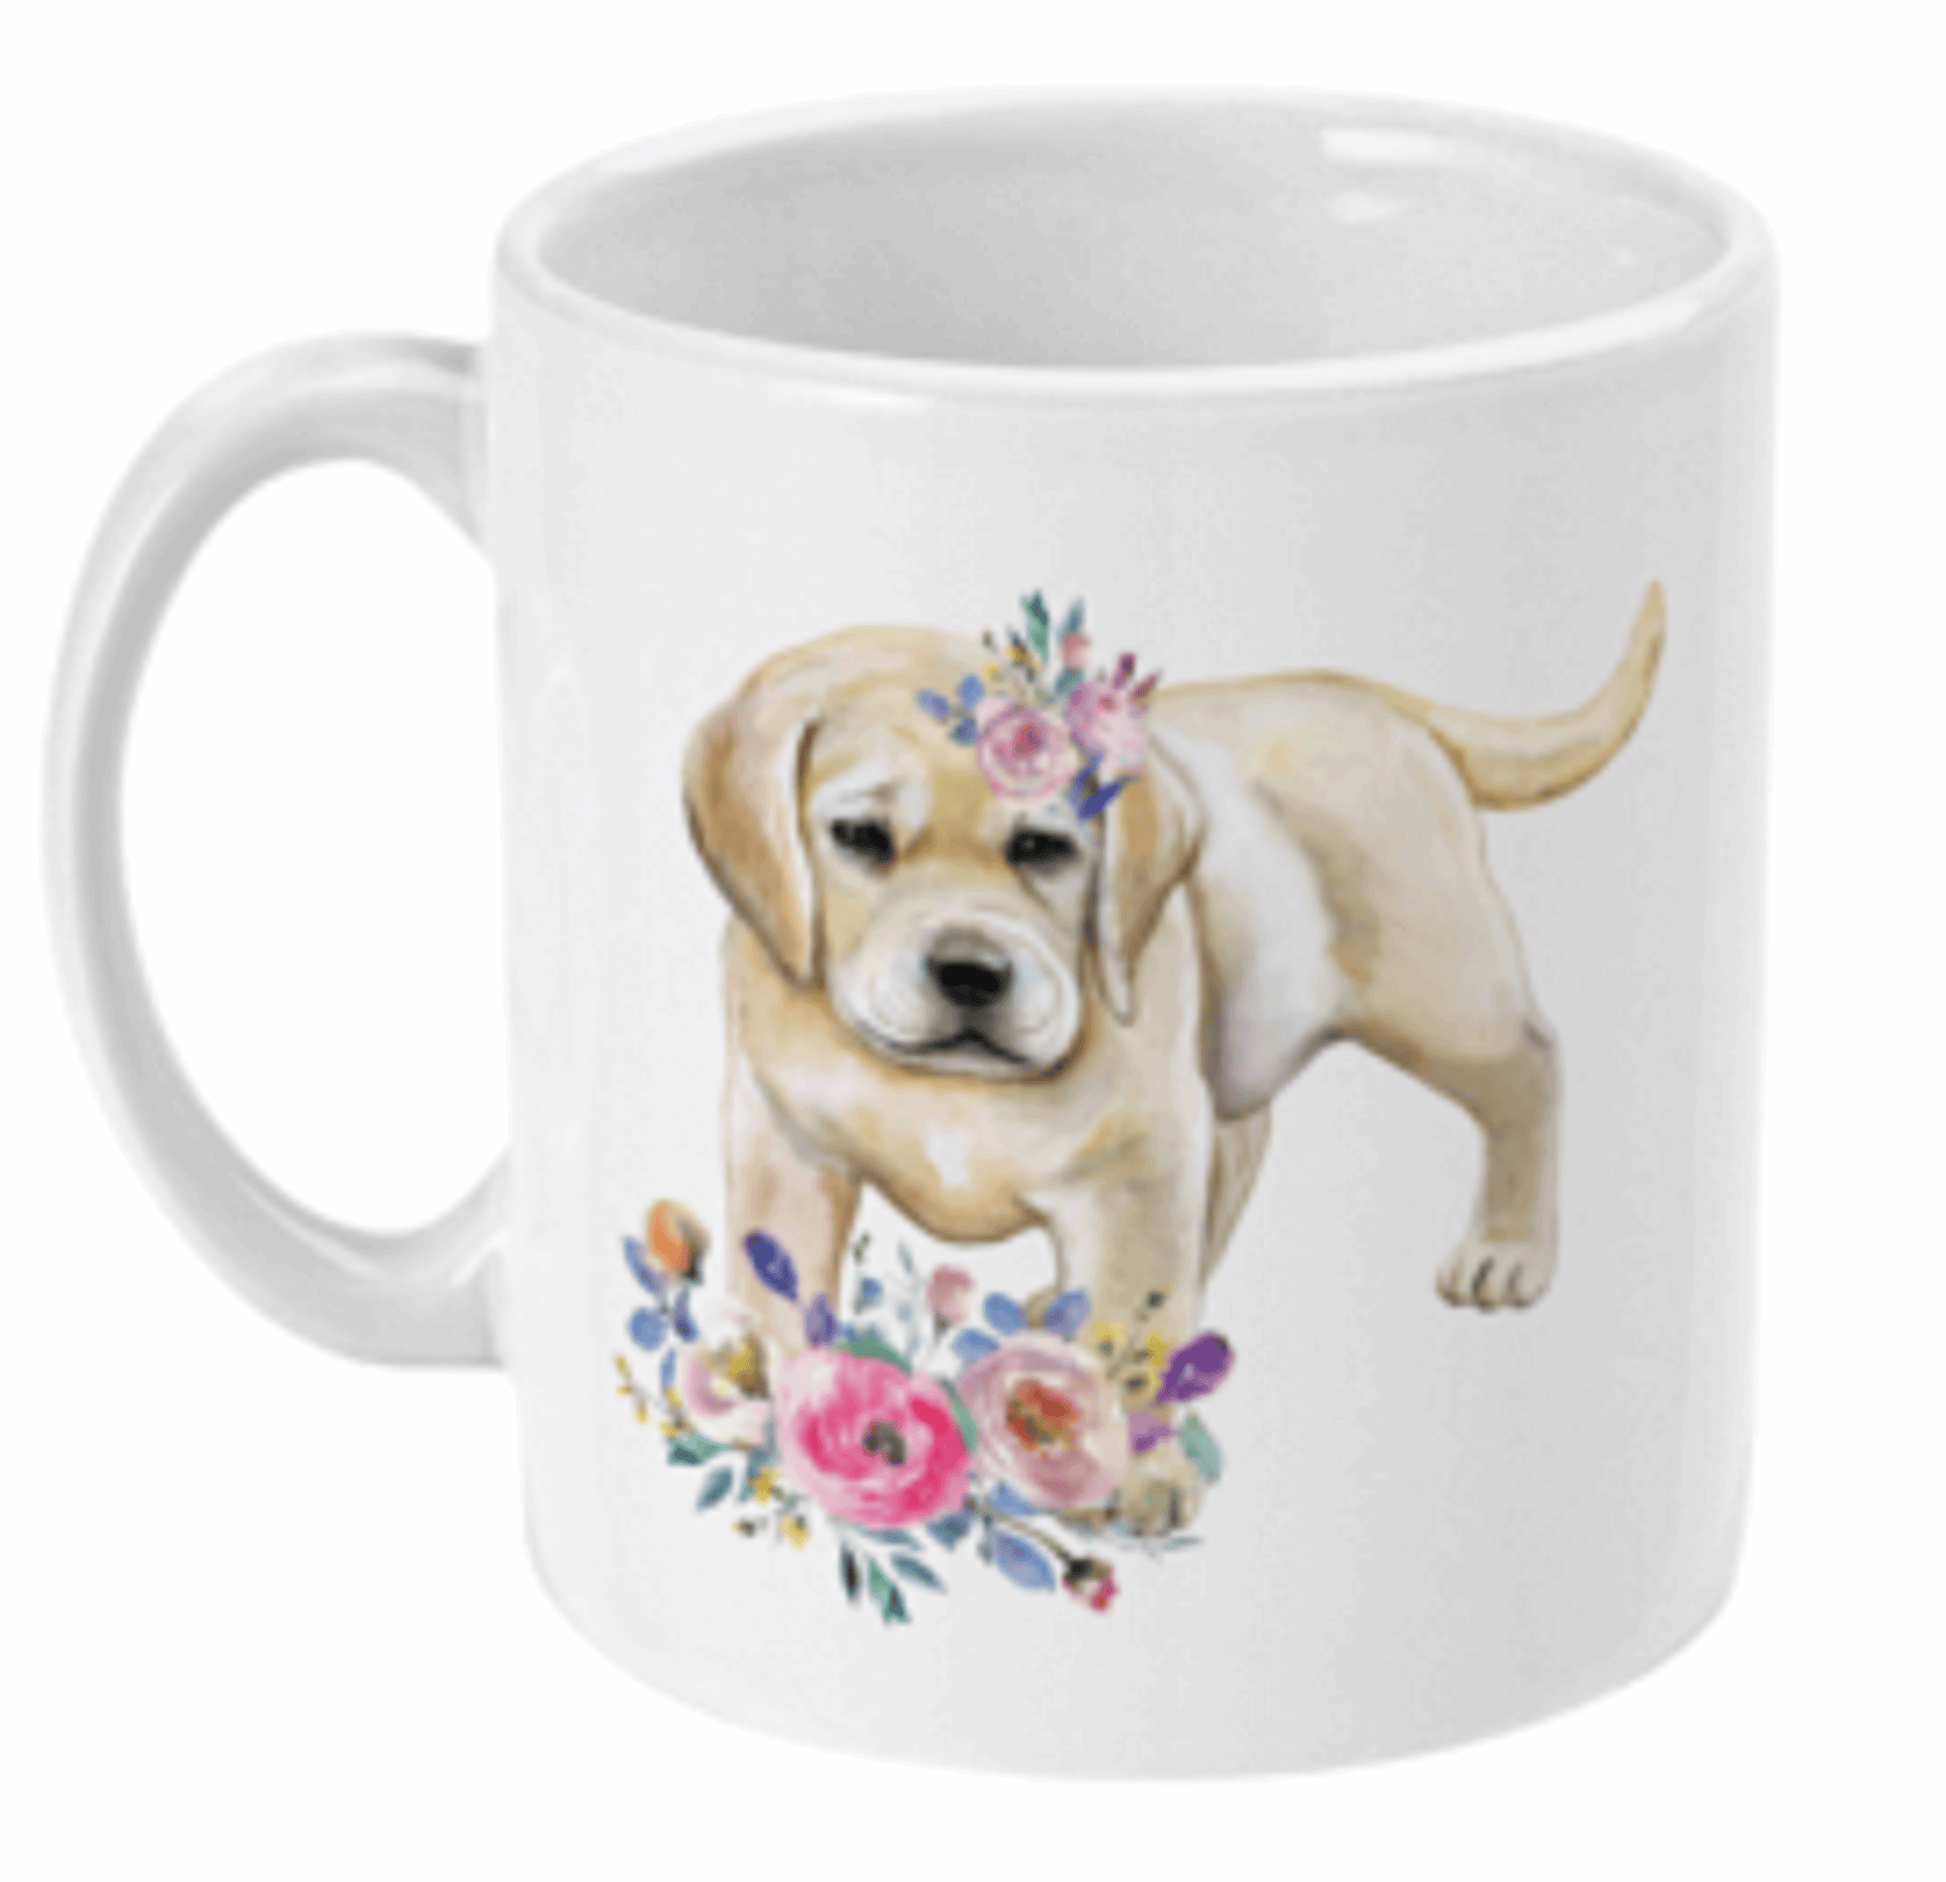  Labrador Puppy With Flowers Coffee Mug by Free Spirit Accessories sold by Free Spirit Accessories